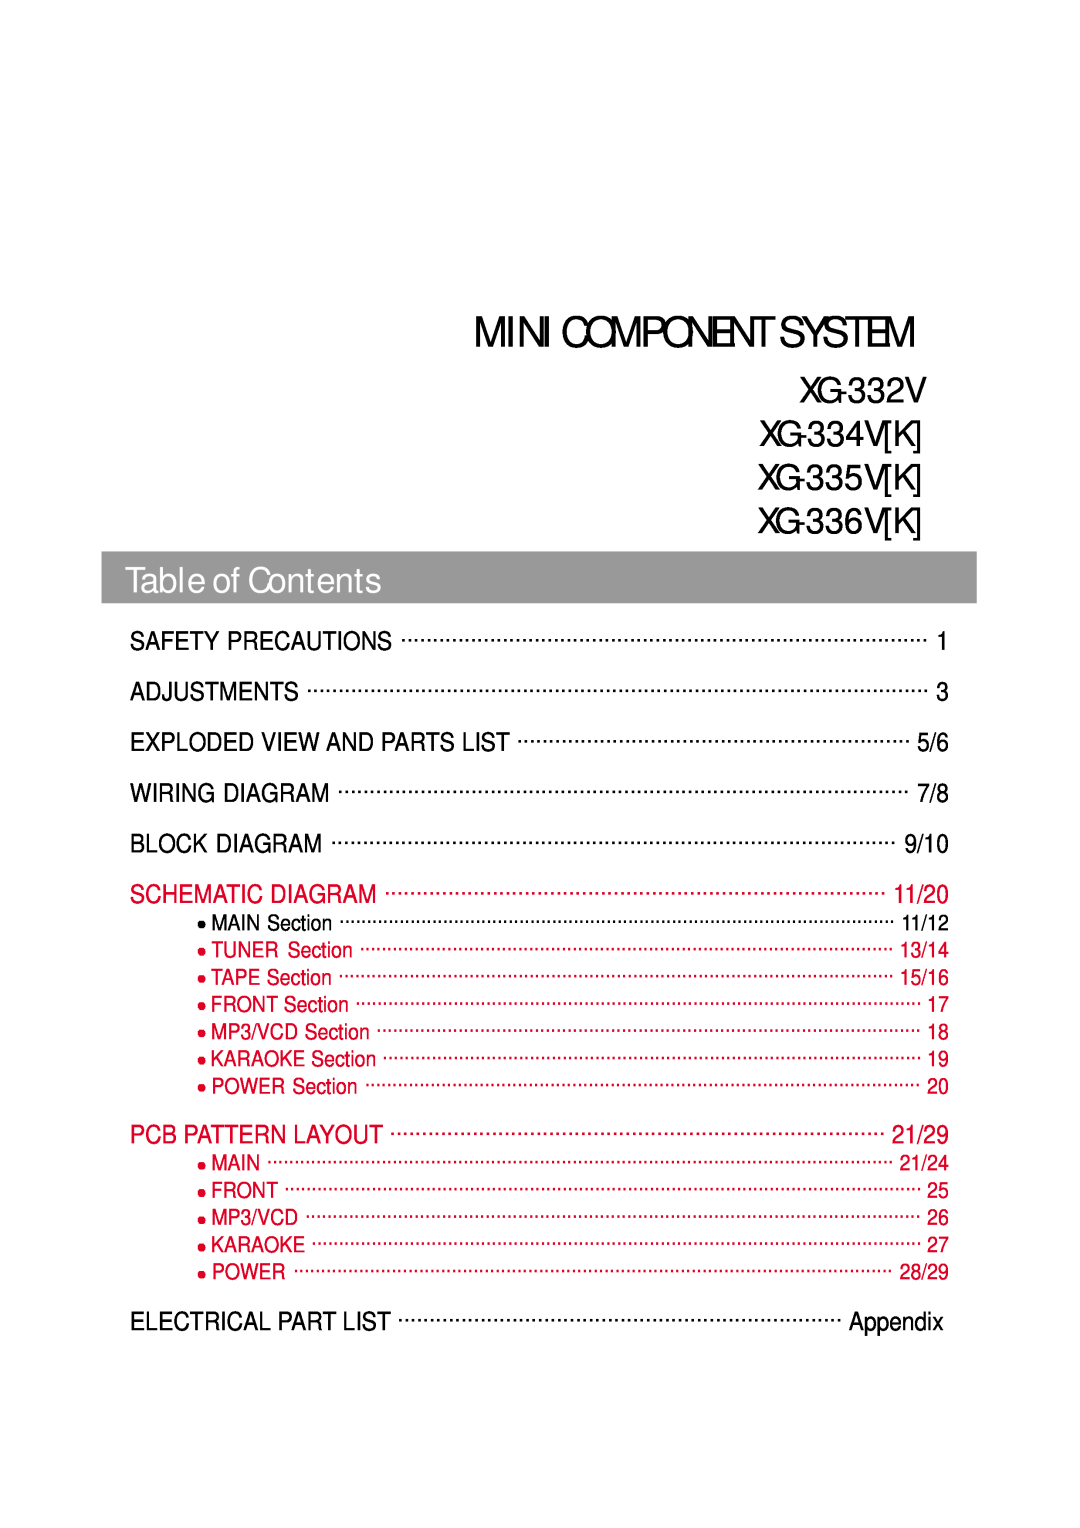 Daewoo XG332V Table of Contents, Mini Component System, XG-332V XG-334VK XG-335VK XG-336VK, 9/10, Block Diagram, Appendix 